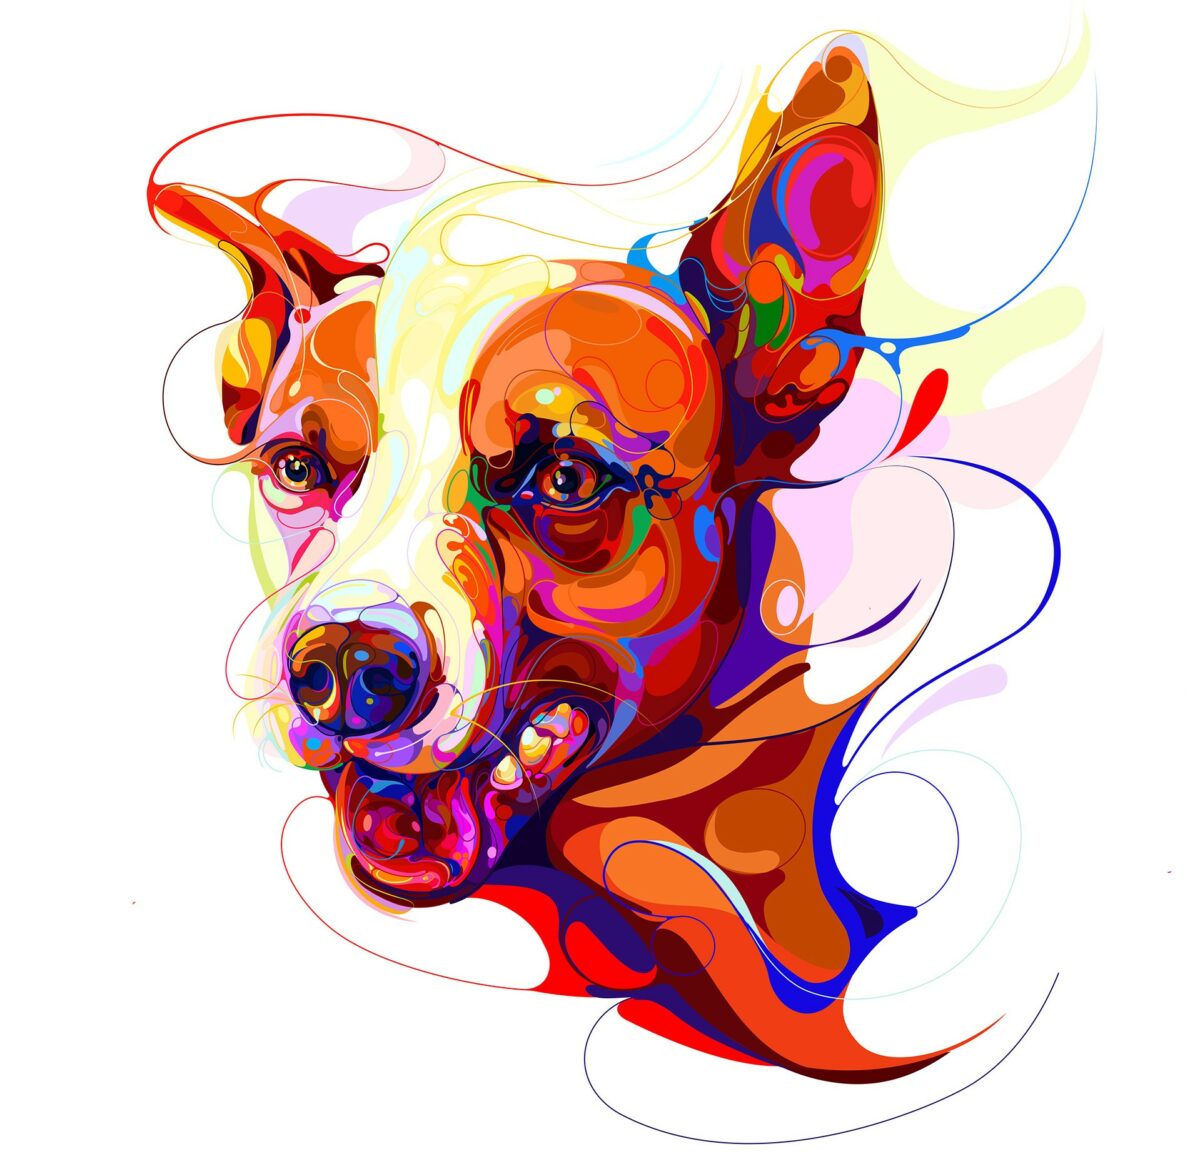 Kaleidoscopic Illustrations Of Expressive Dogs By Marina Okhromenko 4